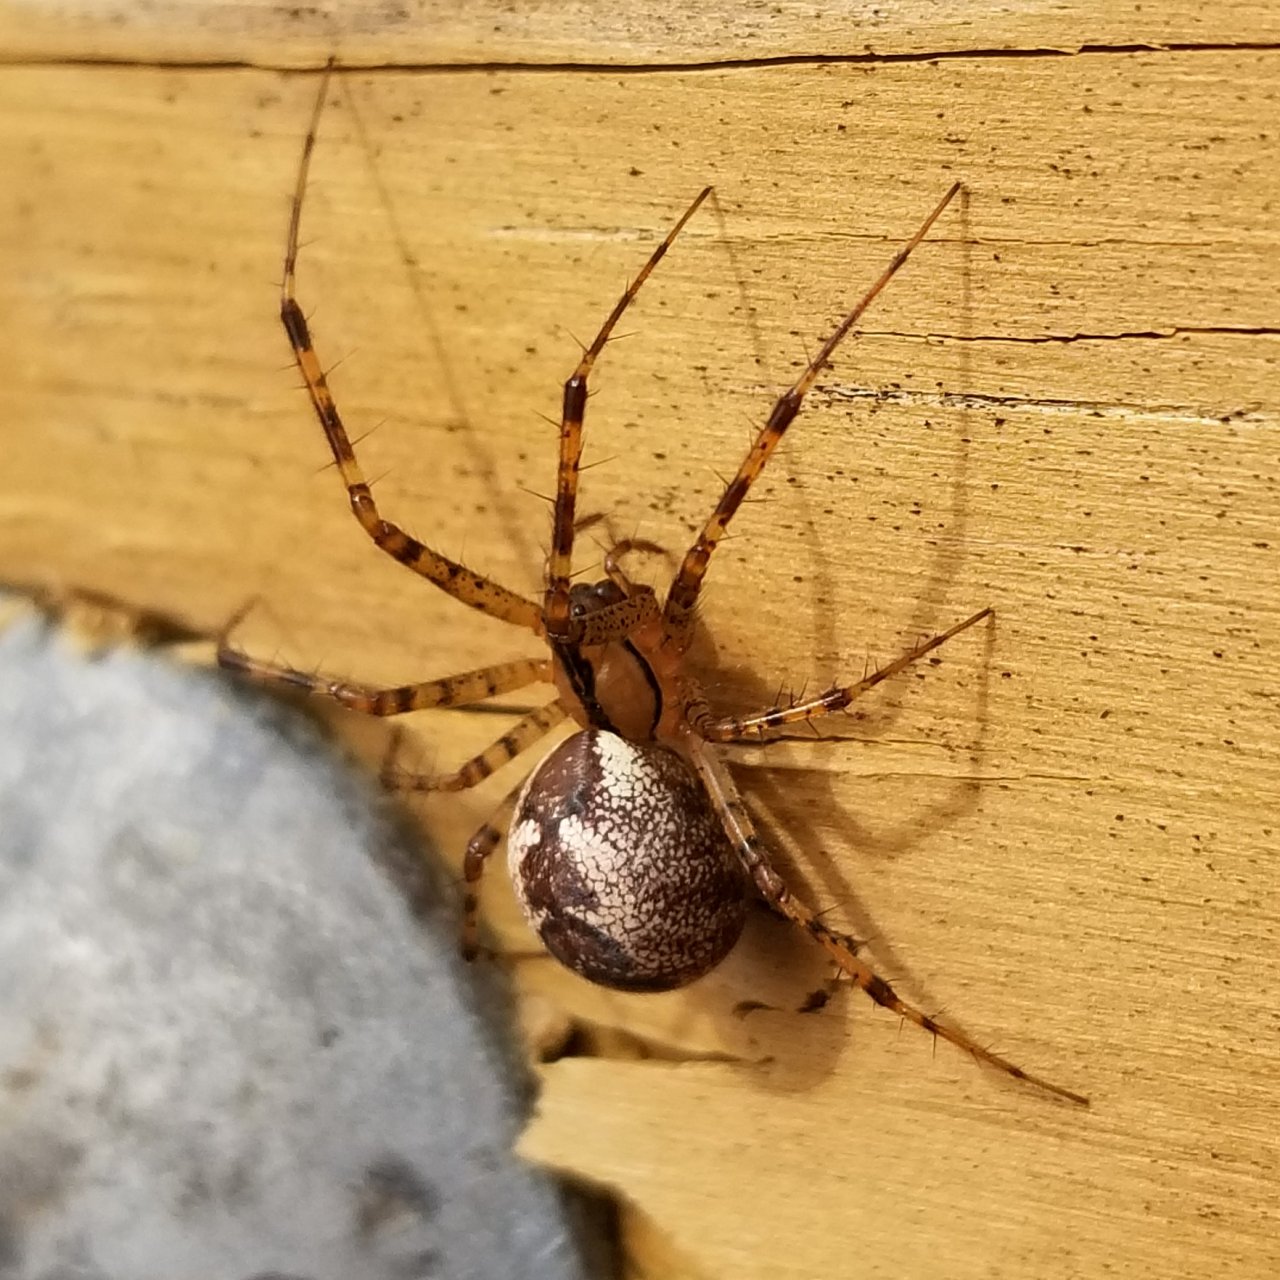 Female Hammock Spider